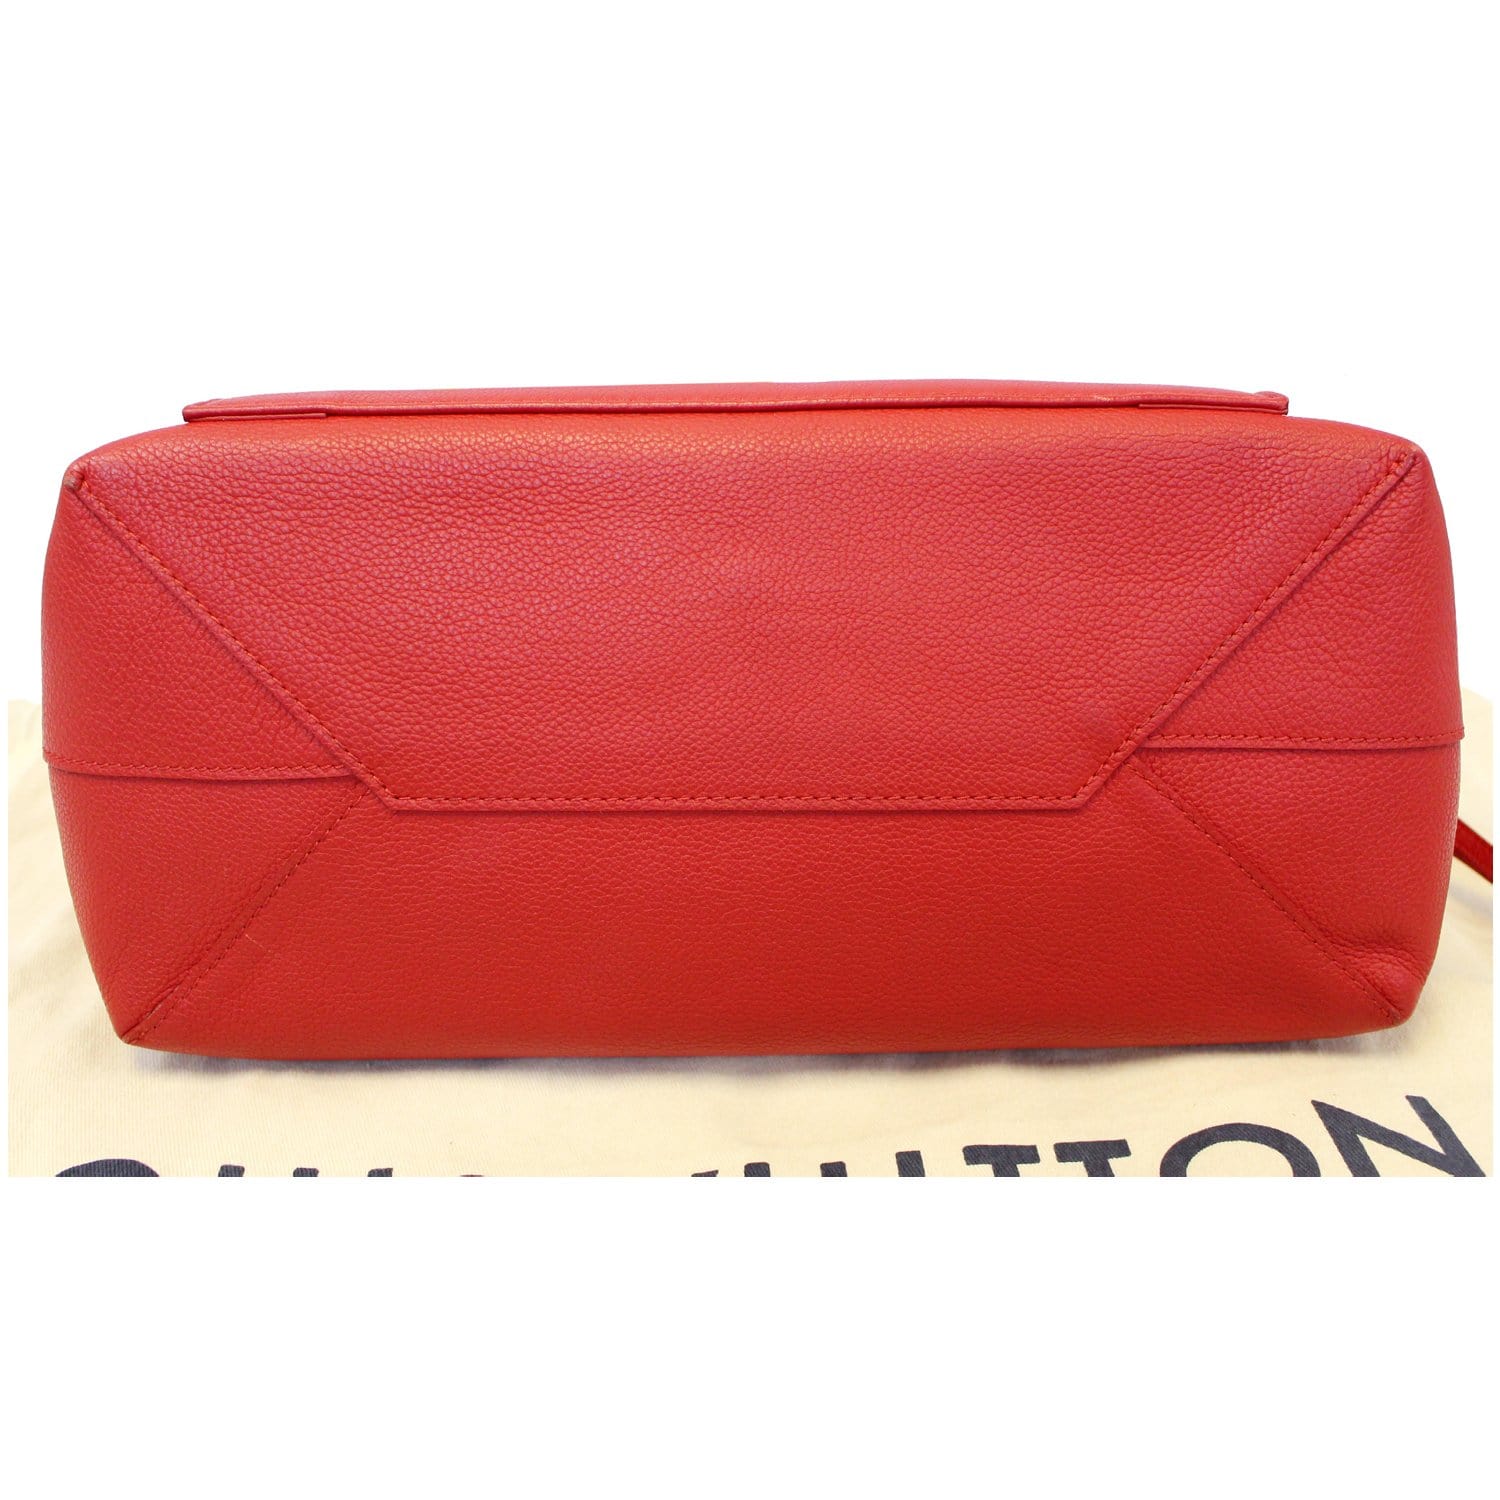 MyLockme Calfskin Leather Top Handle Bag – Poshbag Boutique